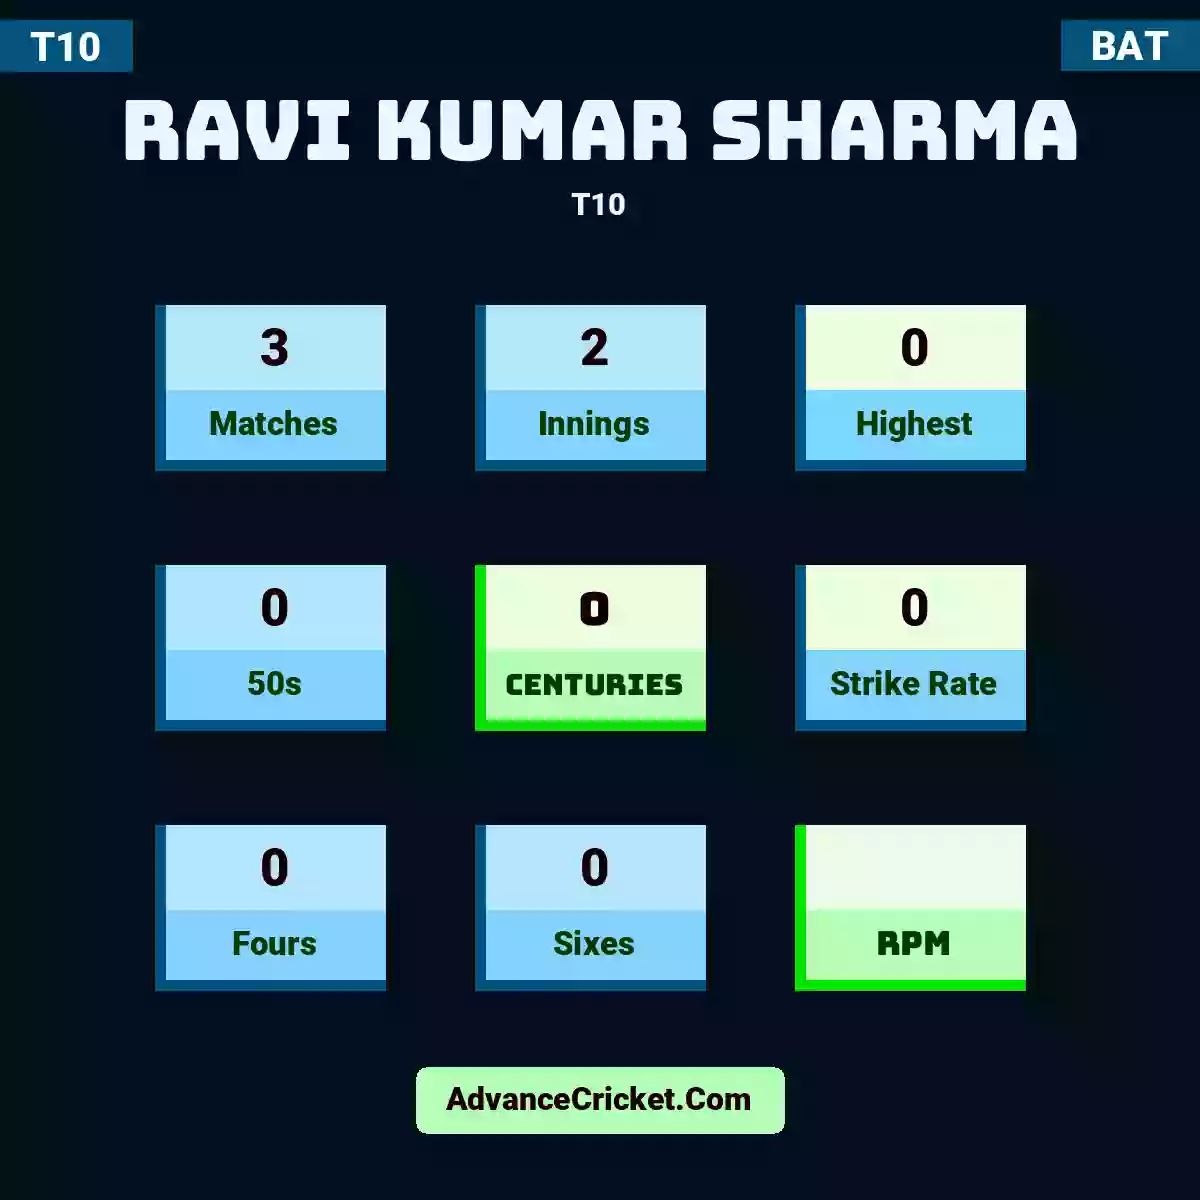 Ravi Kumar Sharma T10 , Ravi Kumar Sharma played 3 matches, scored 0 runs as highest, 0 half-centuries, and 0 centuries, with a strike rate of 0. R.Kumar.Sharma hit 0 fours and 0 sixes.